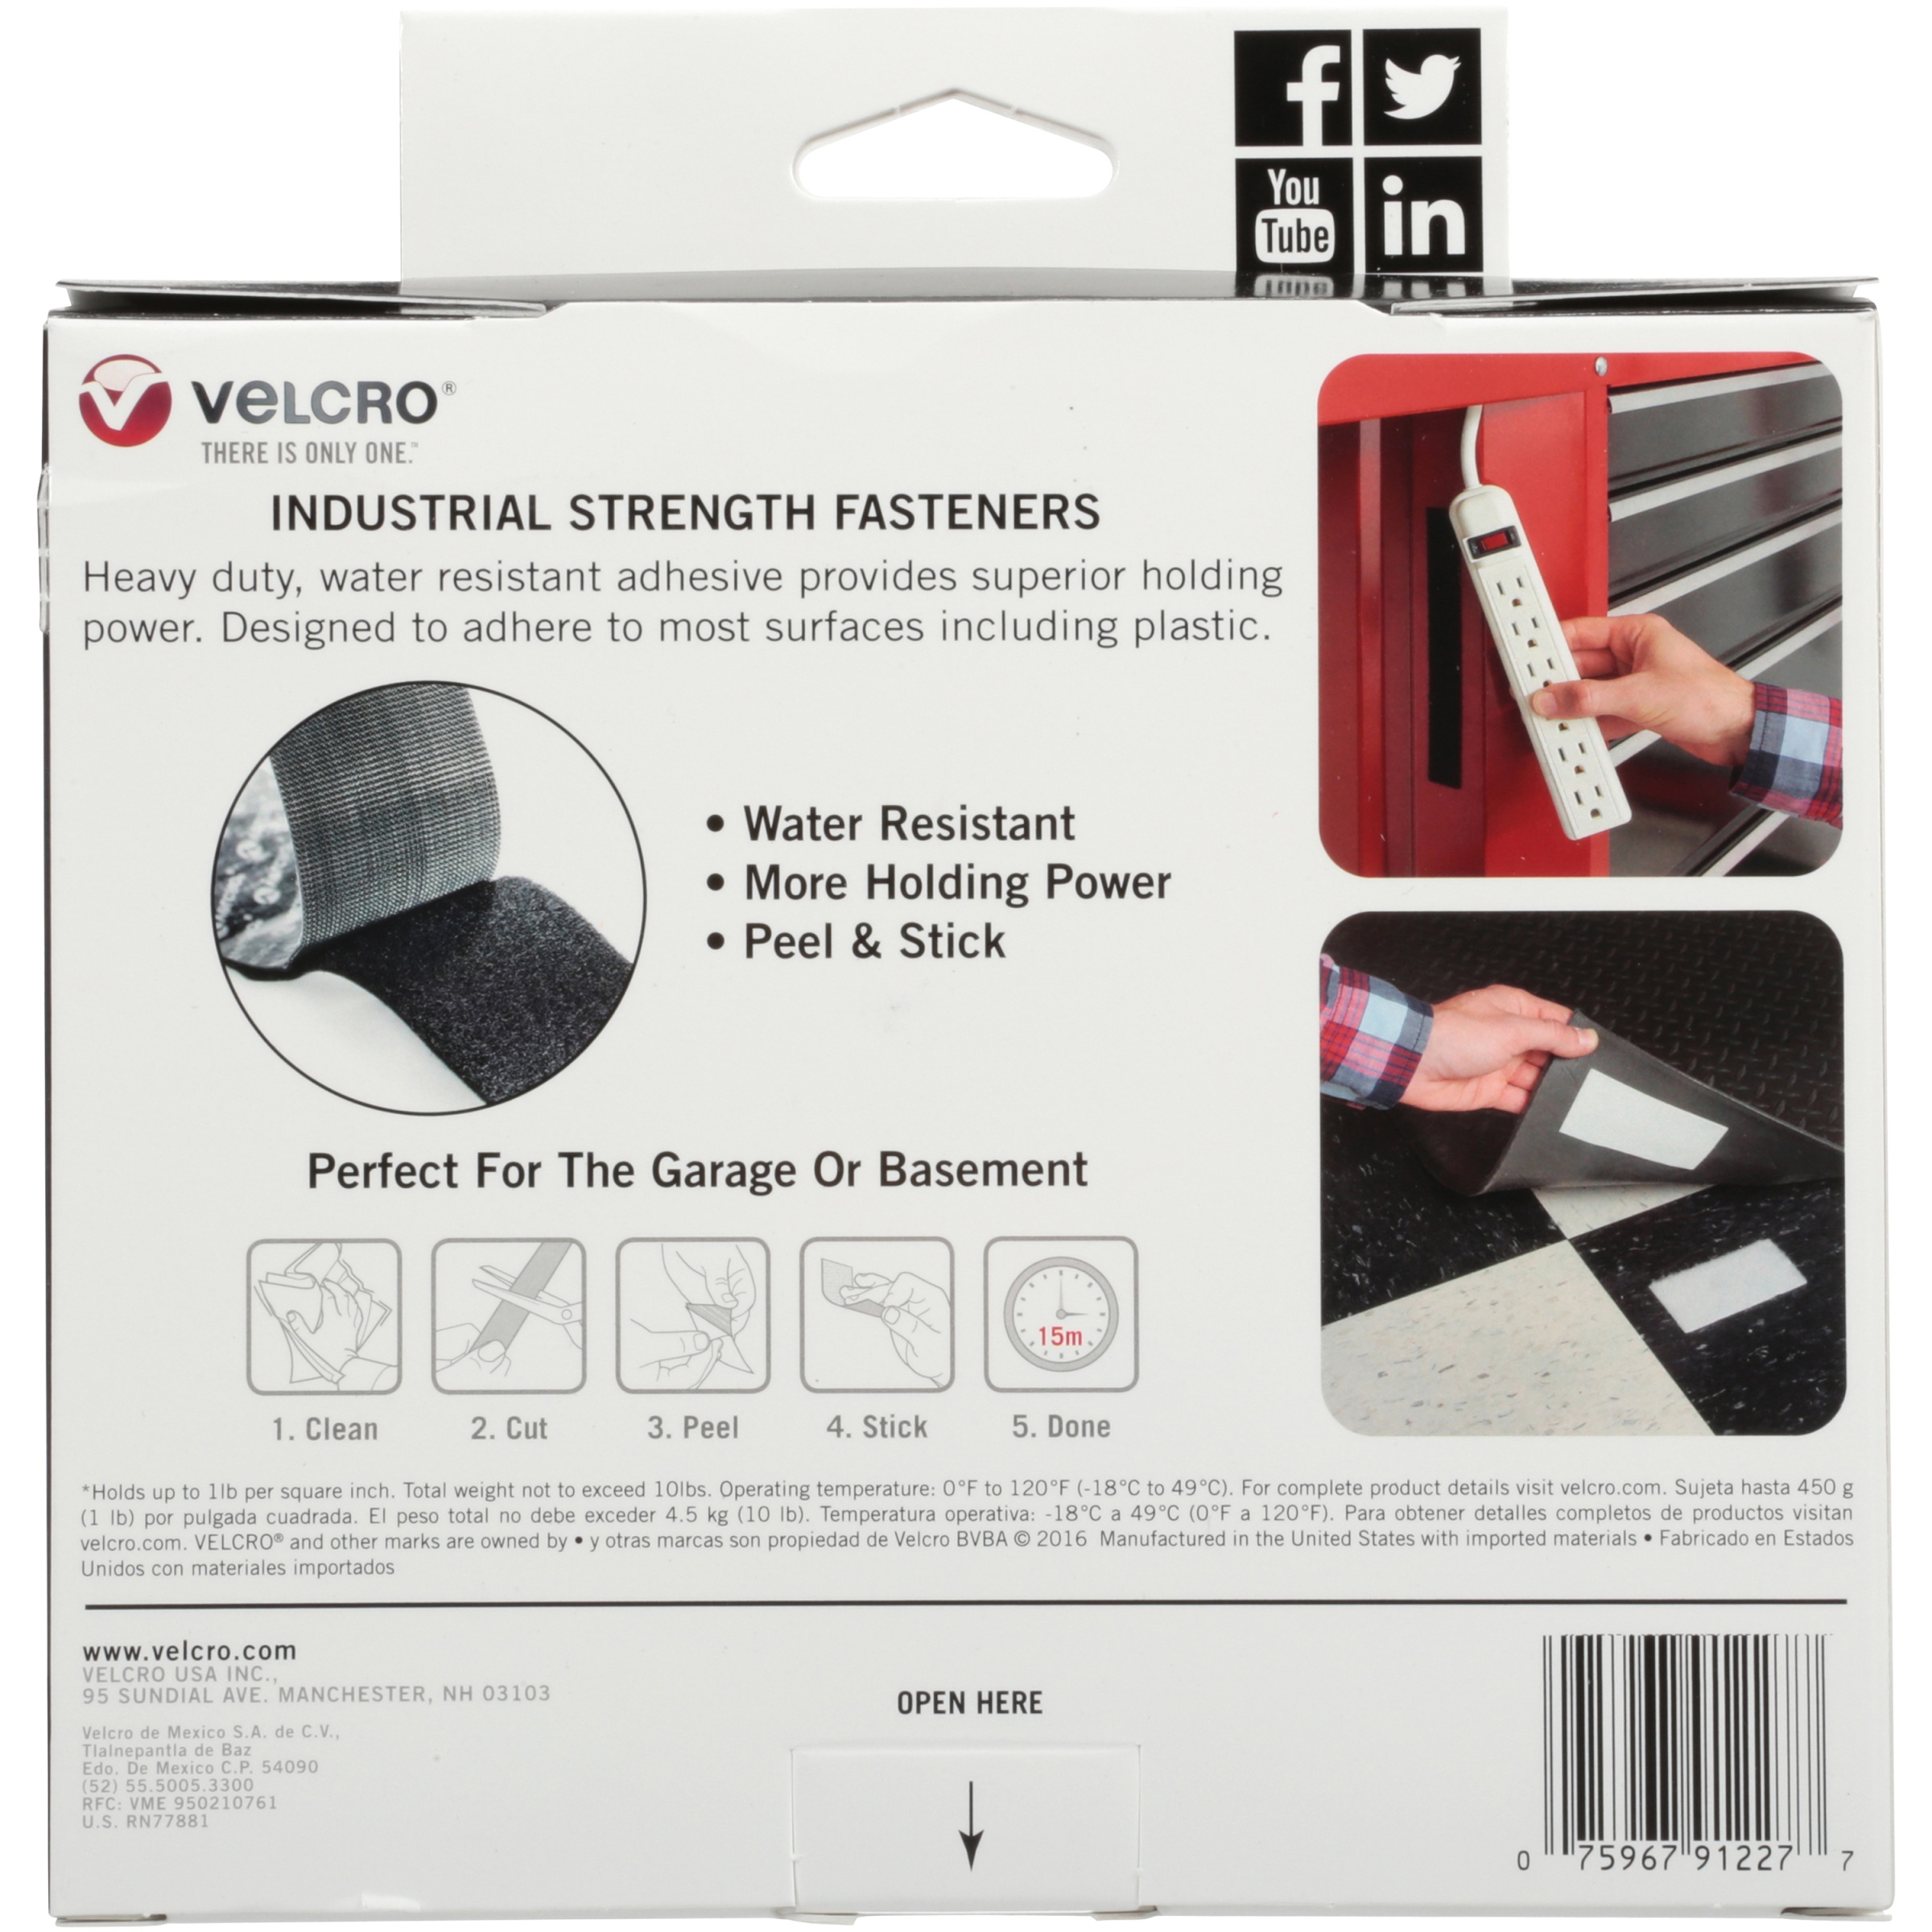 VELCRO Brand Industrial Strength, 15' x 2" Tape, Black - image 2 of 4